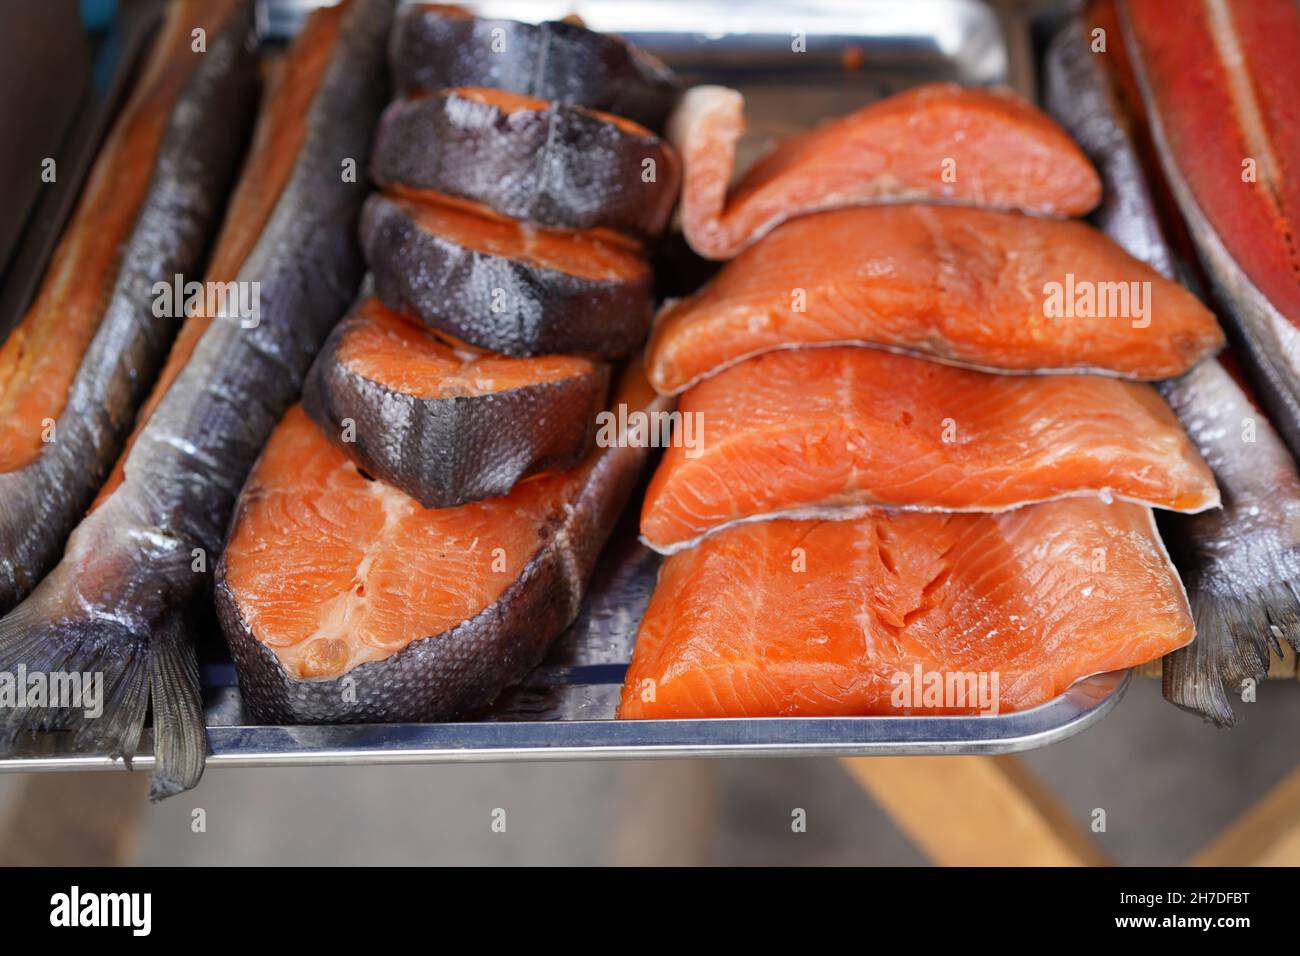 https://c8.alamy.com/comp/2H7DFBT/smoked-red-fish-on-a-metal-tray-fish-market-2H7DFBT.jpg